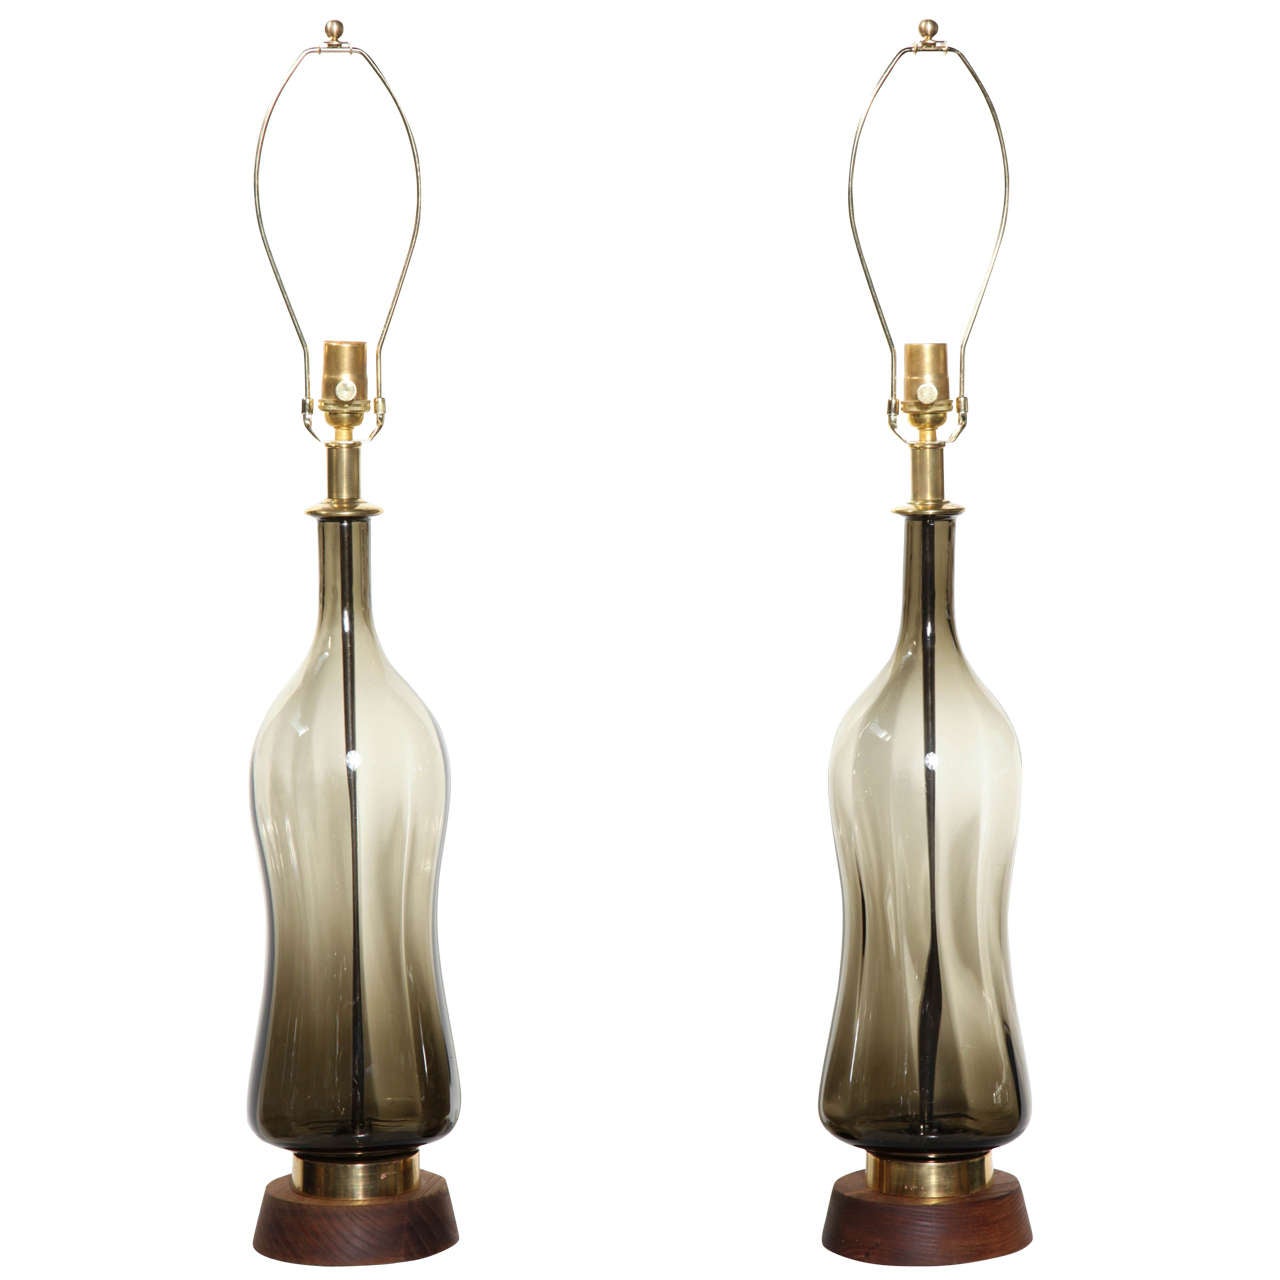 Monumentales Paar olivgrüner Glas-Tischlampen „Hourglass“ im Blenko-Stil, 1950er Jahre